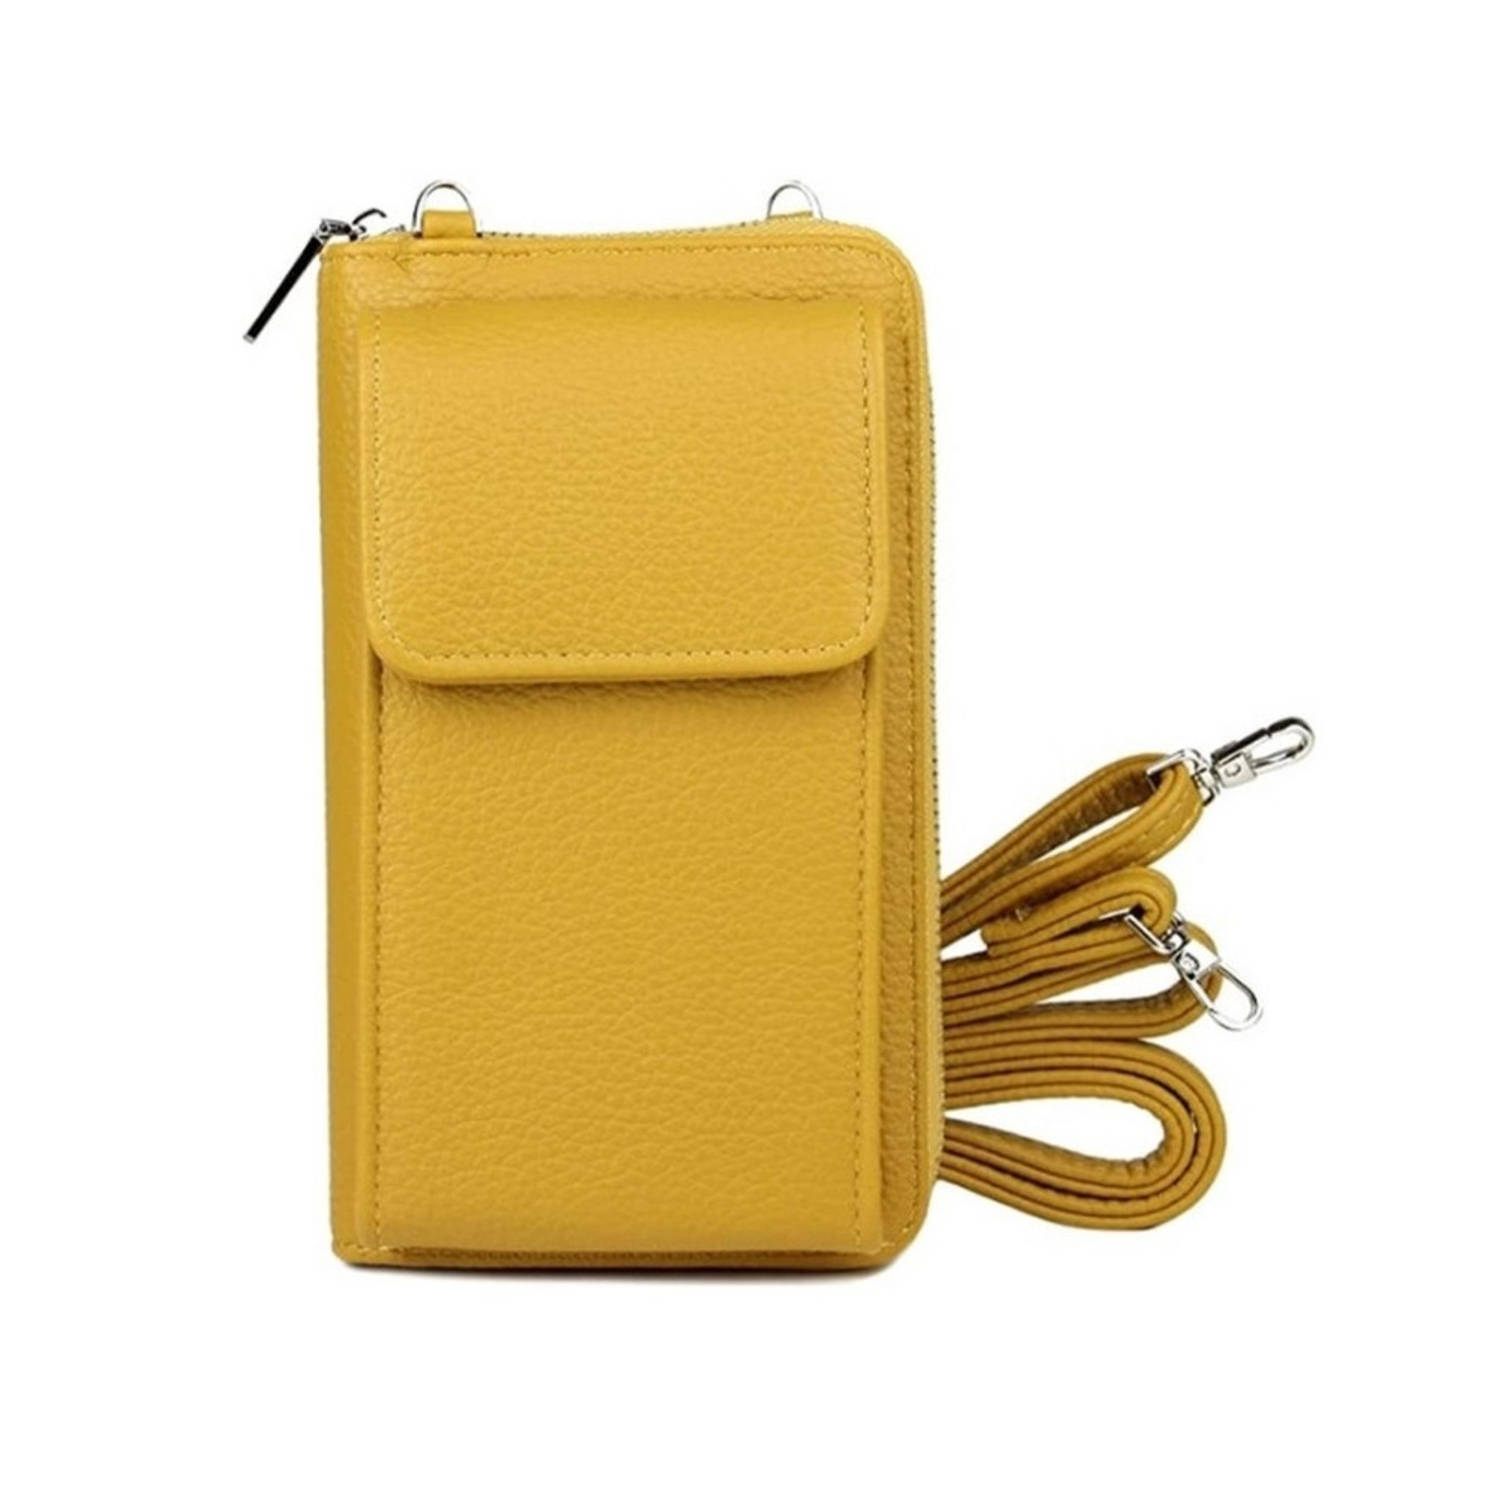 spion Vervelend Het hotel iBello portemonnee tasje met schouderband geel telefoontasje dames  Anti-skim RFID festival tas Portemonnee voor mobiel | Blokker